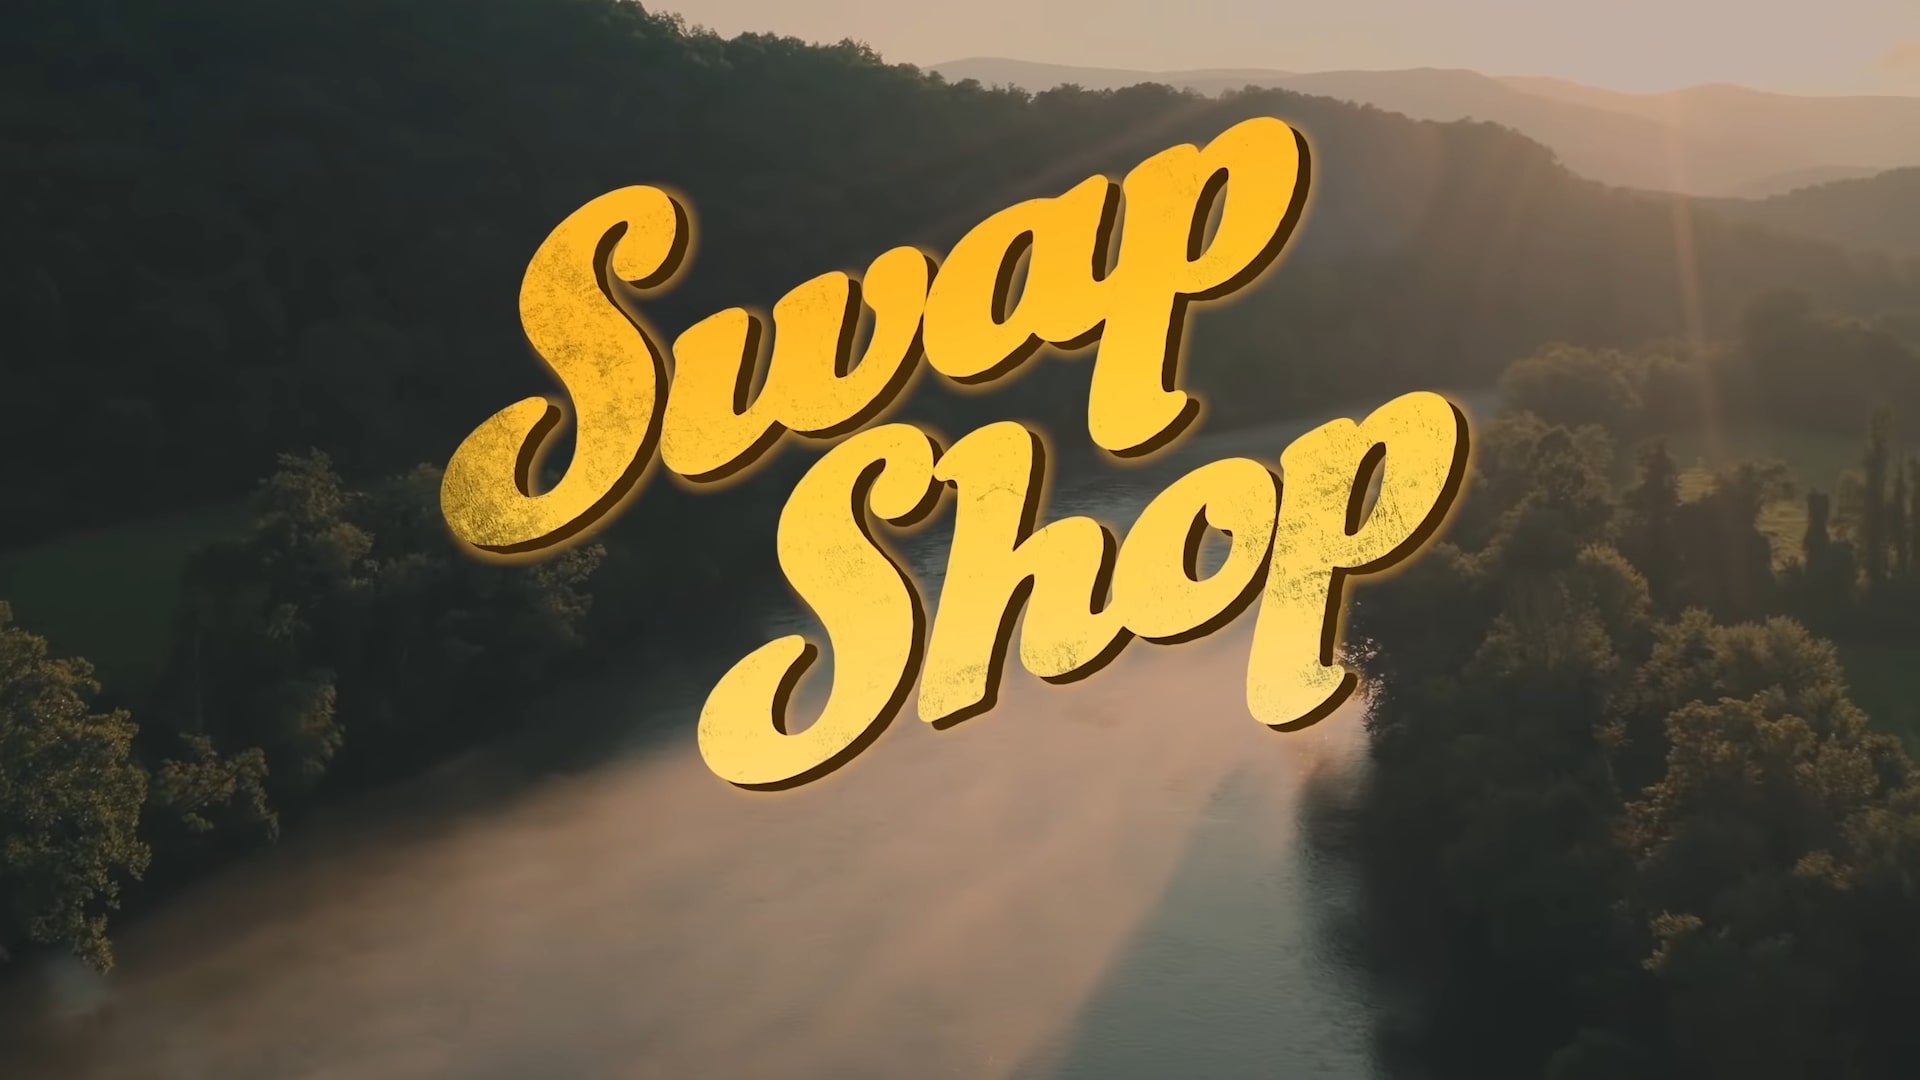 Netflix Swap Shop Season 1 Trailer, Coming to Netflix in November 202